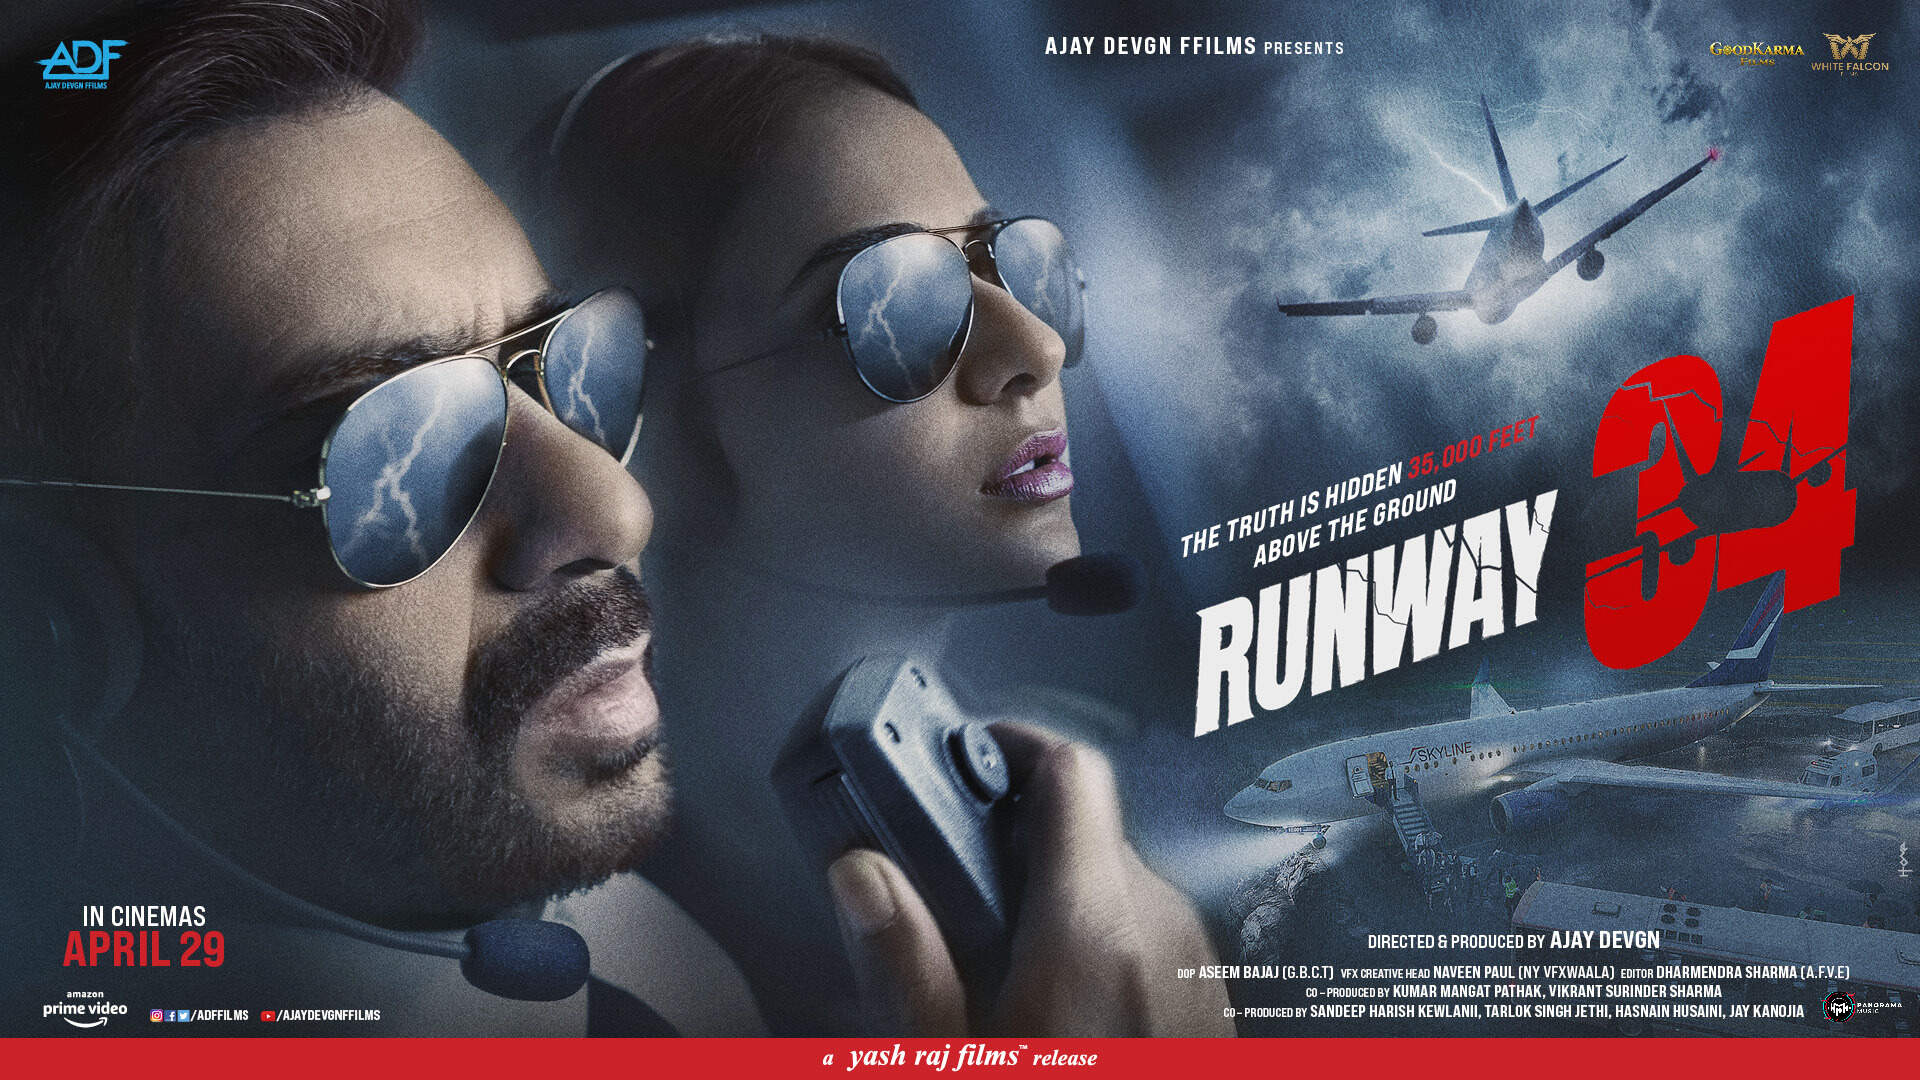 Runway 34 (Hindi) - Szenenbild 1 von 1